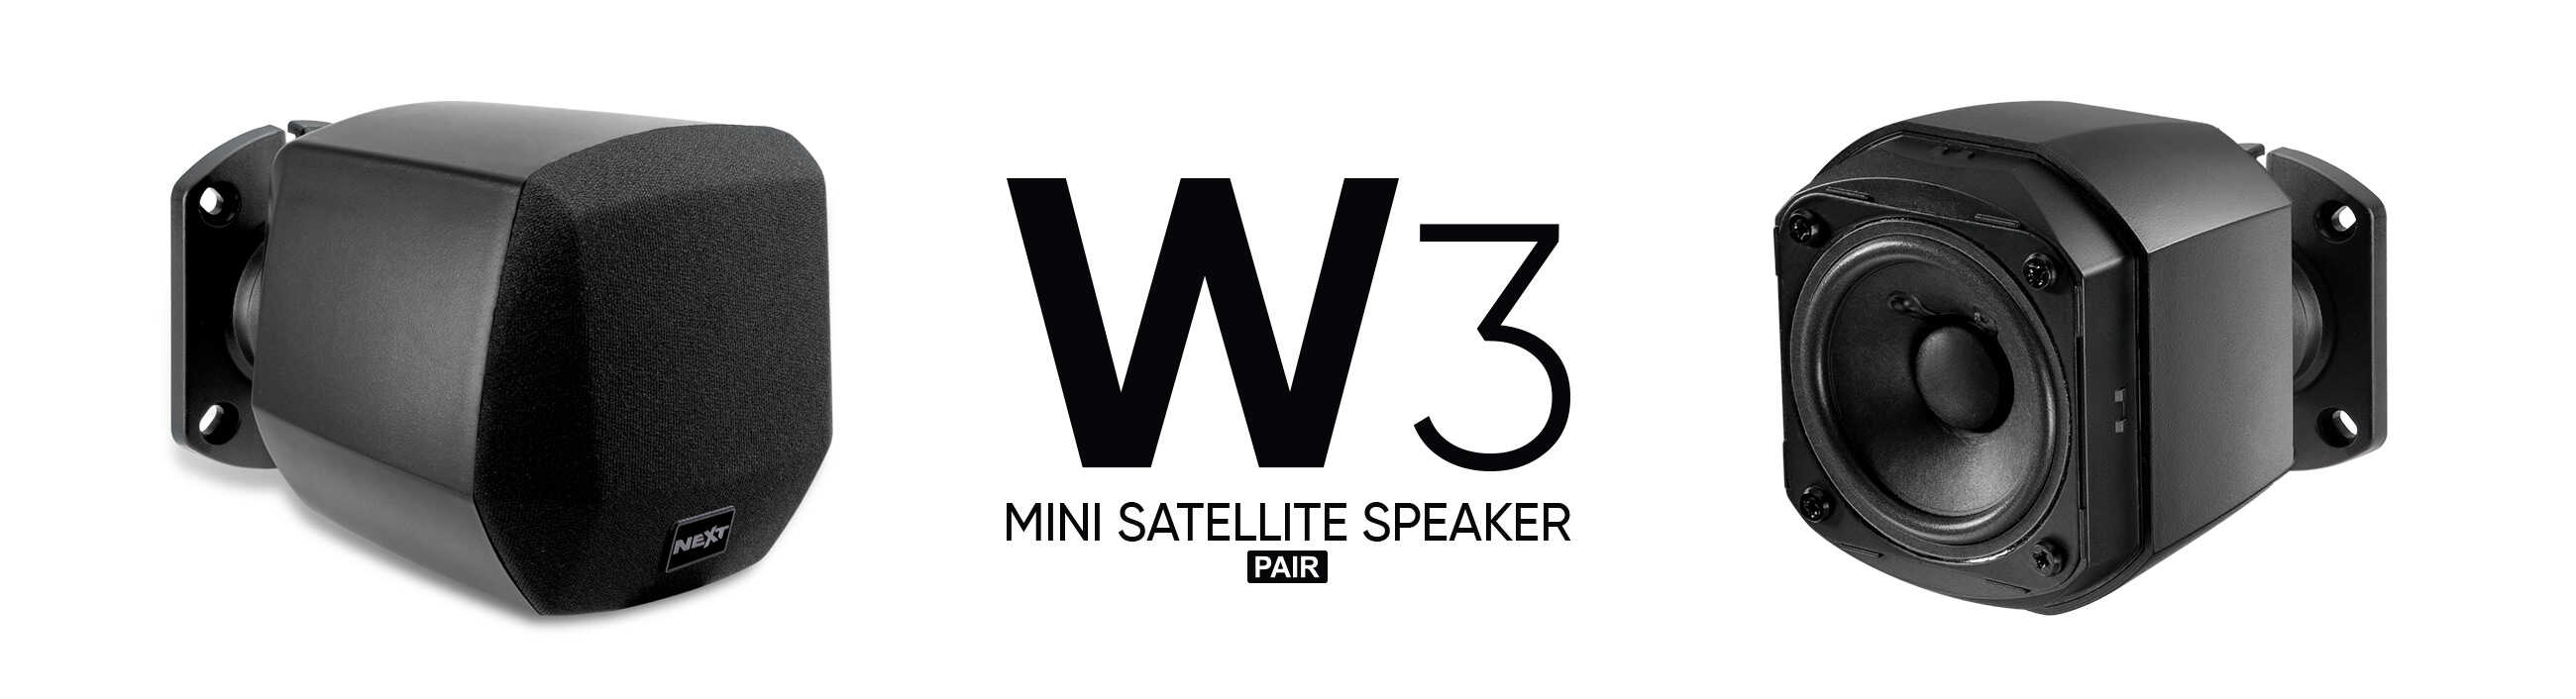 Loa vệ tinh mini NEXT W3 